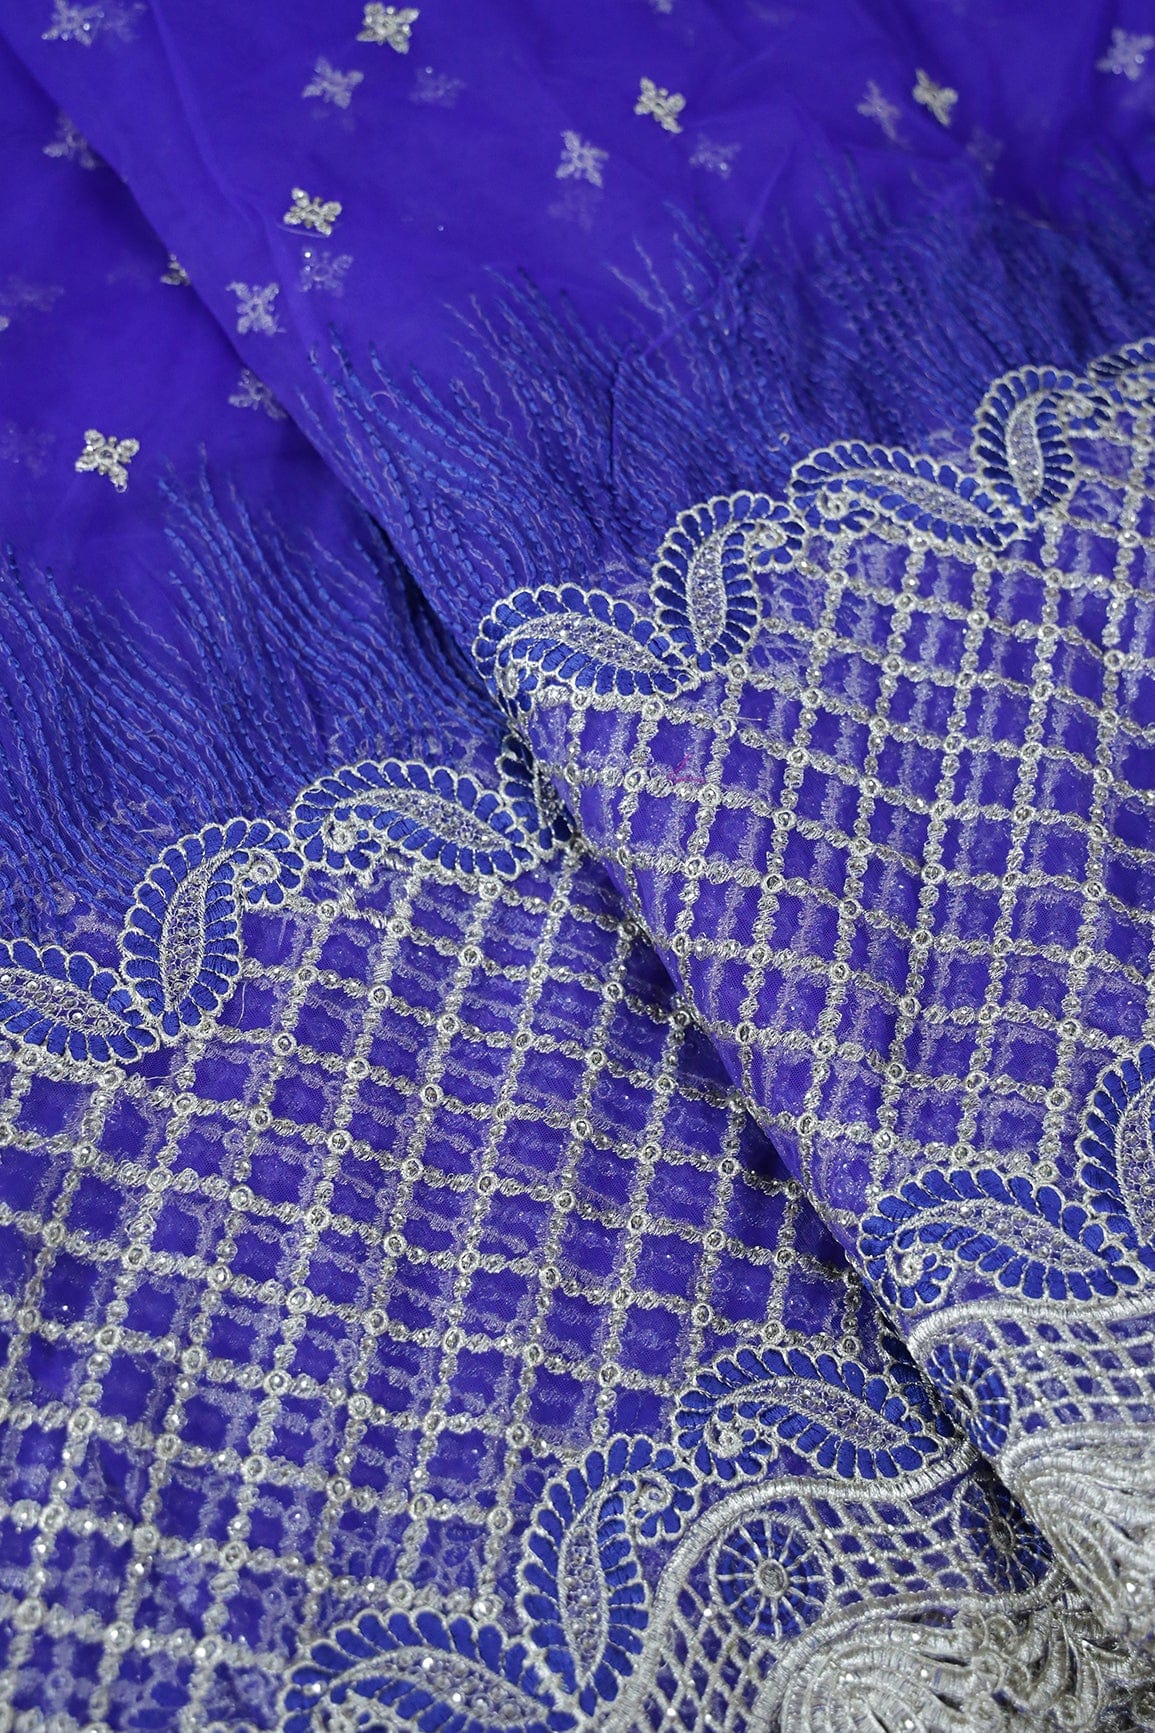 doeraa Embroidery Fabrics Big Width''56'' Blue Thread With Zari Checks Embroidery Work On Royal Blue Soft Net Fabric With Border